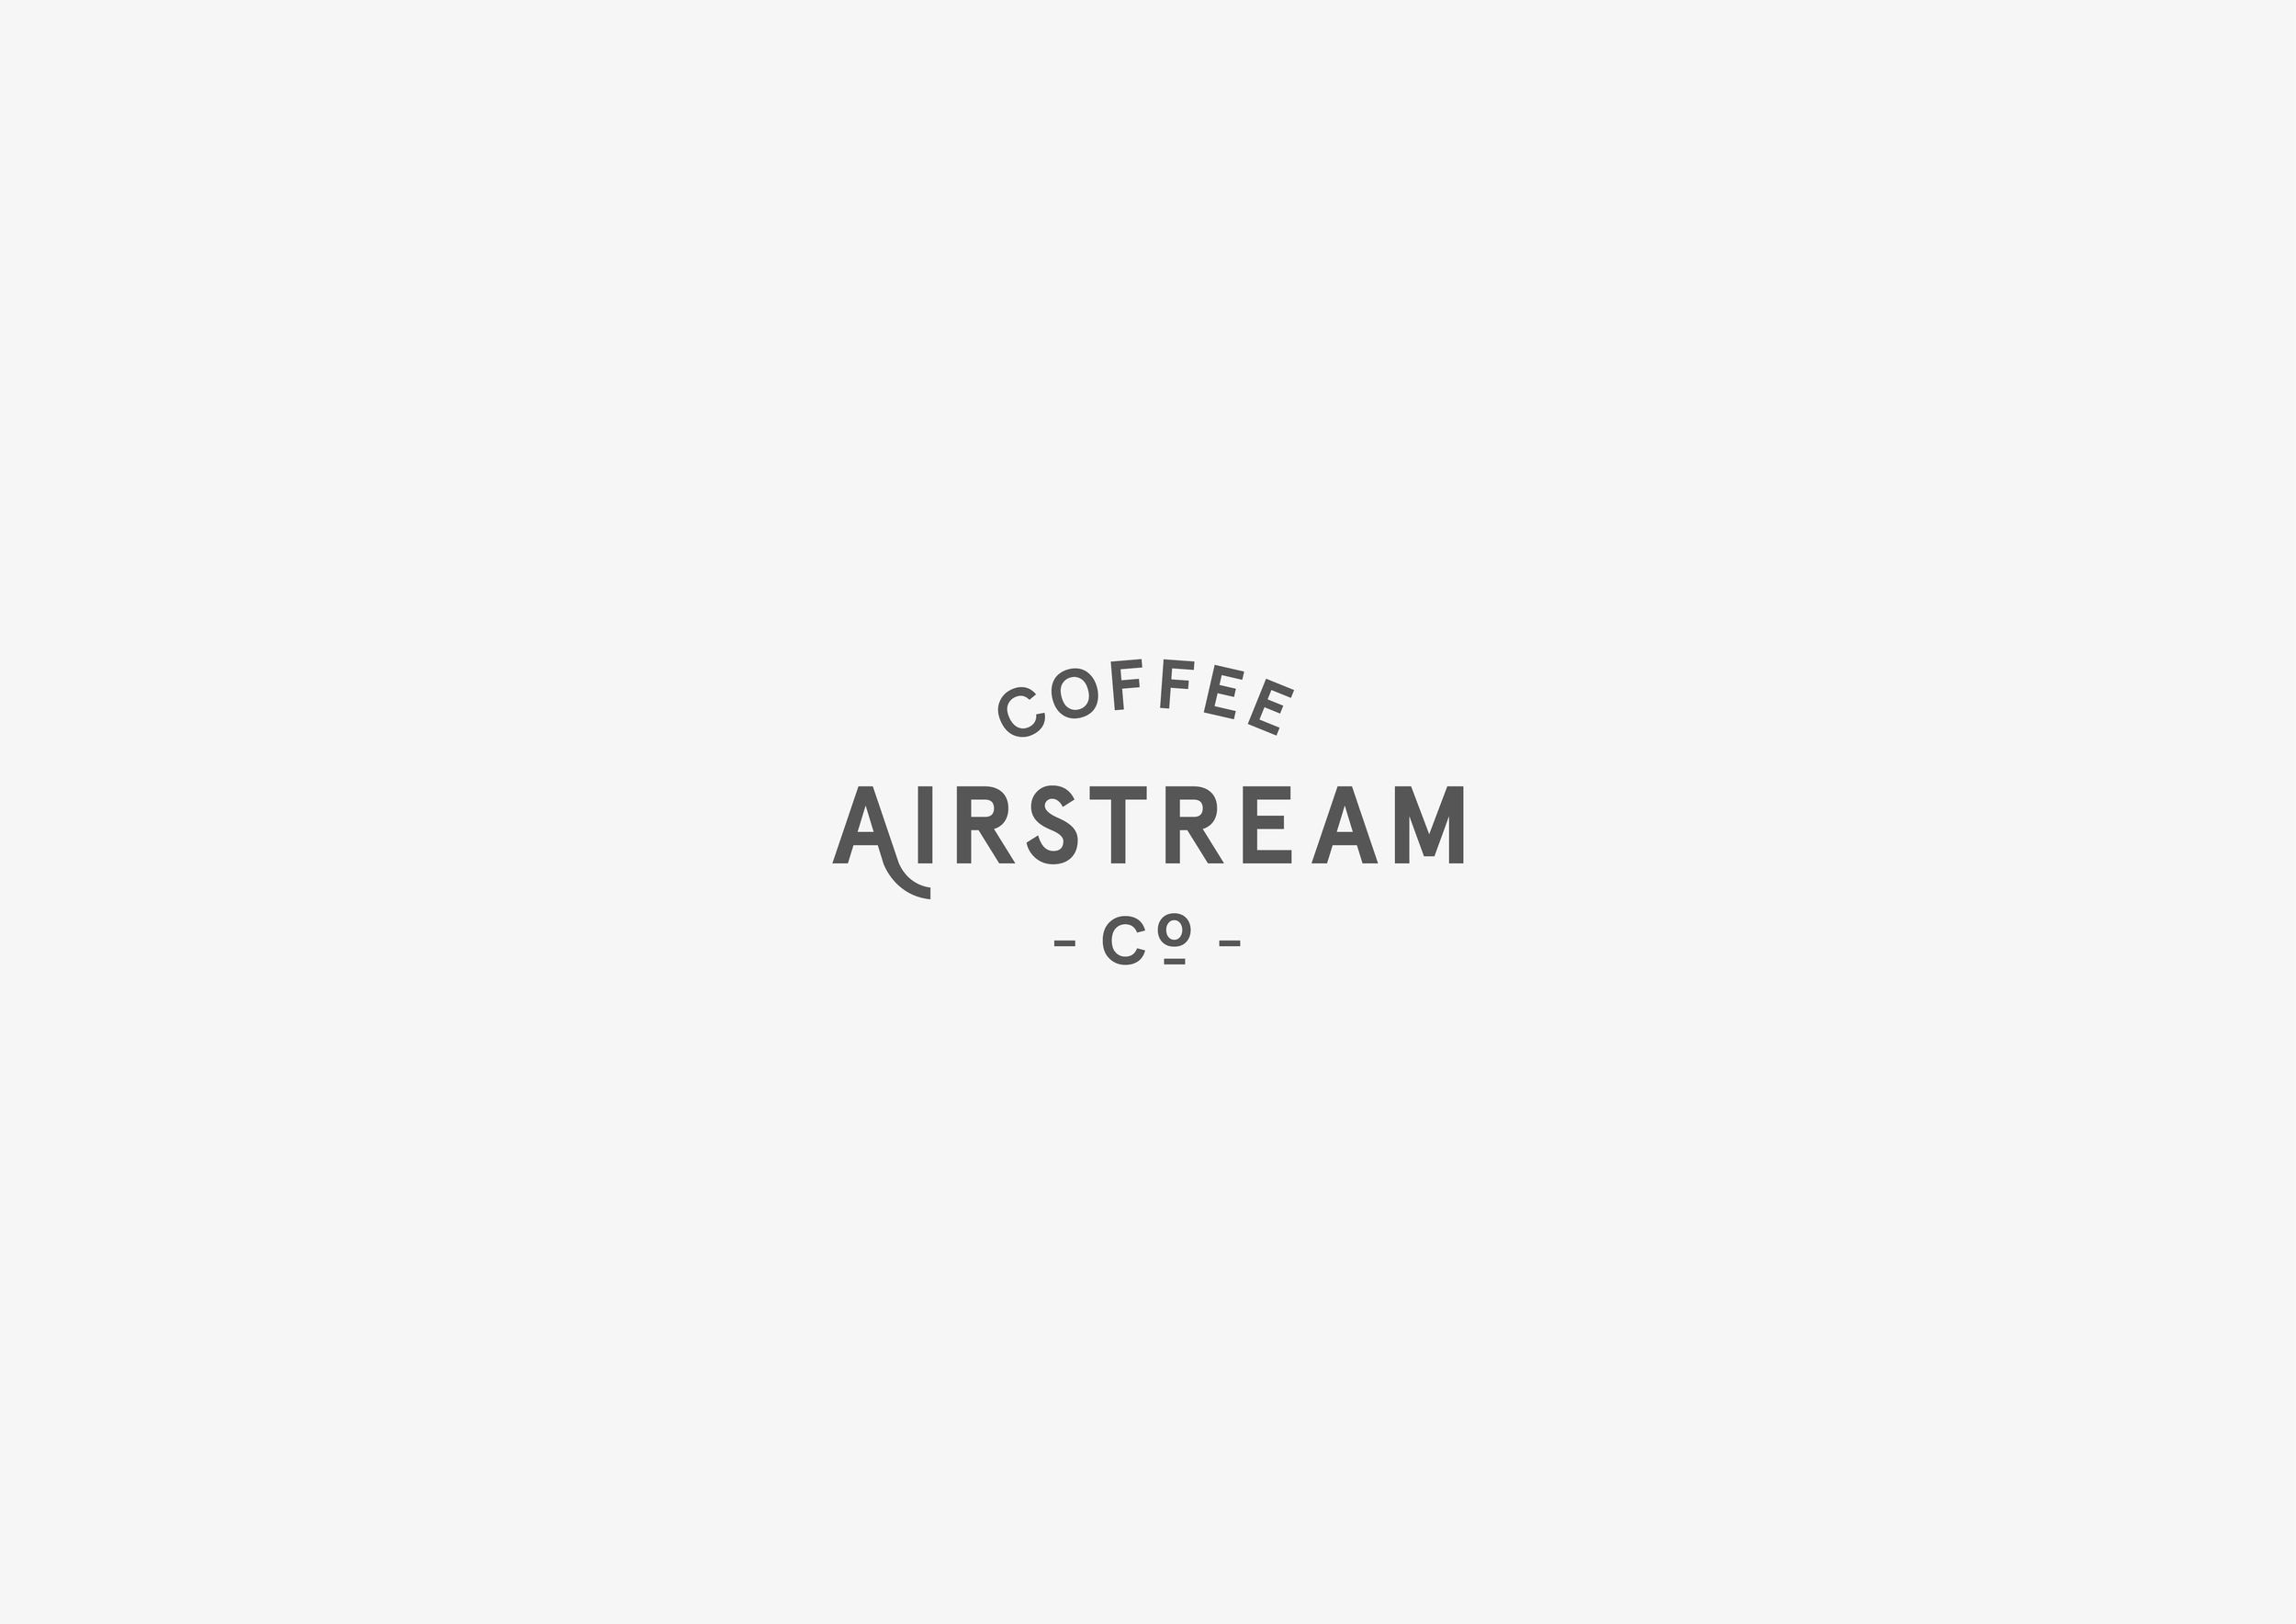 Freelance Logo Designer UK. Coffee Airstream Co brand logo in platinum background